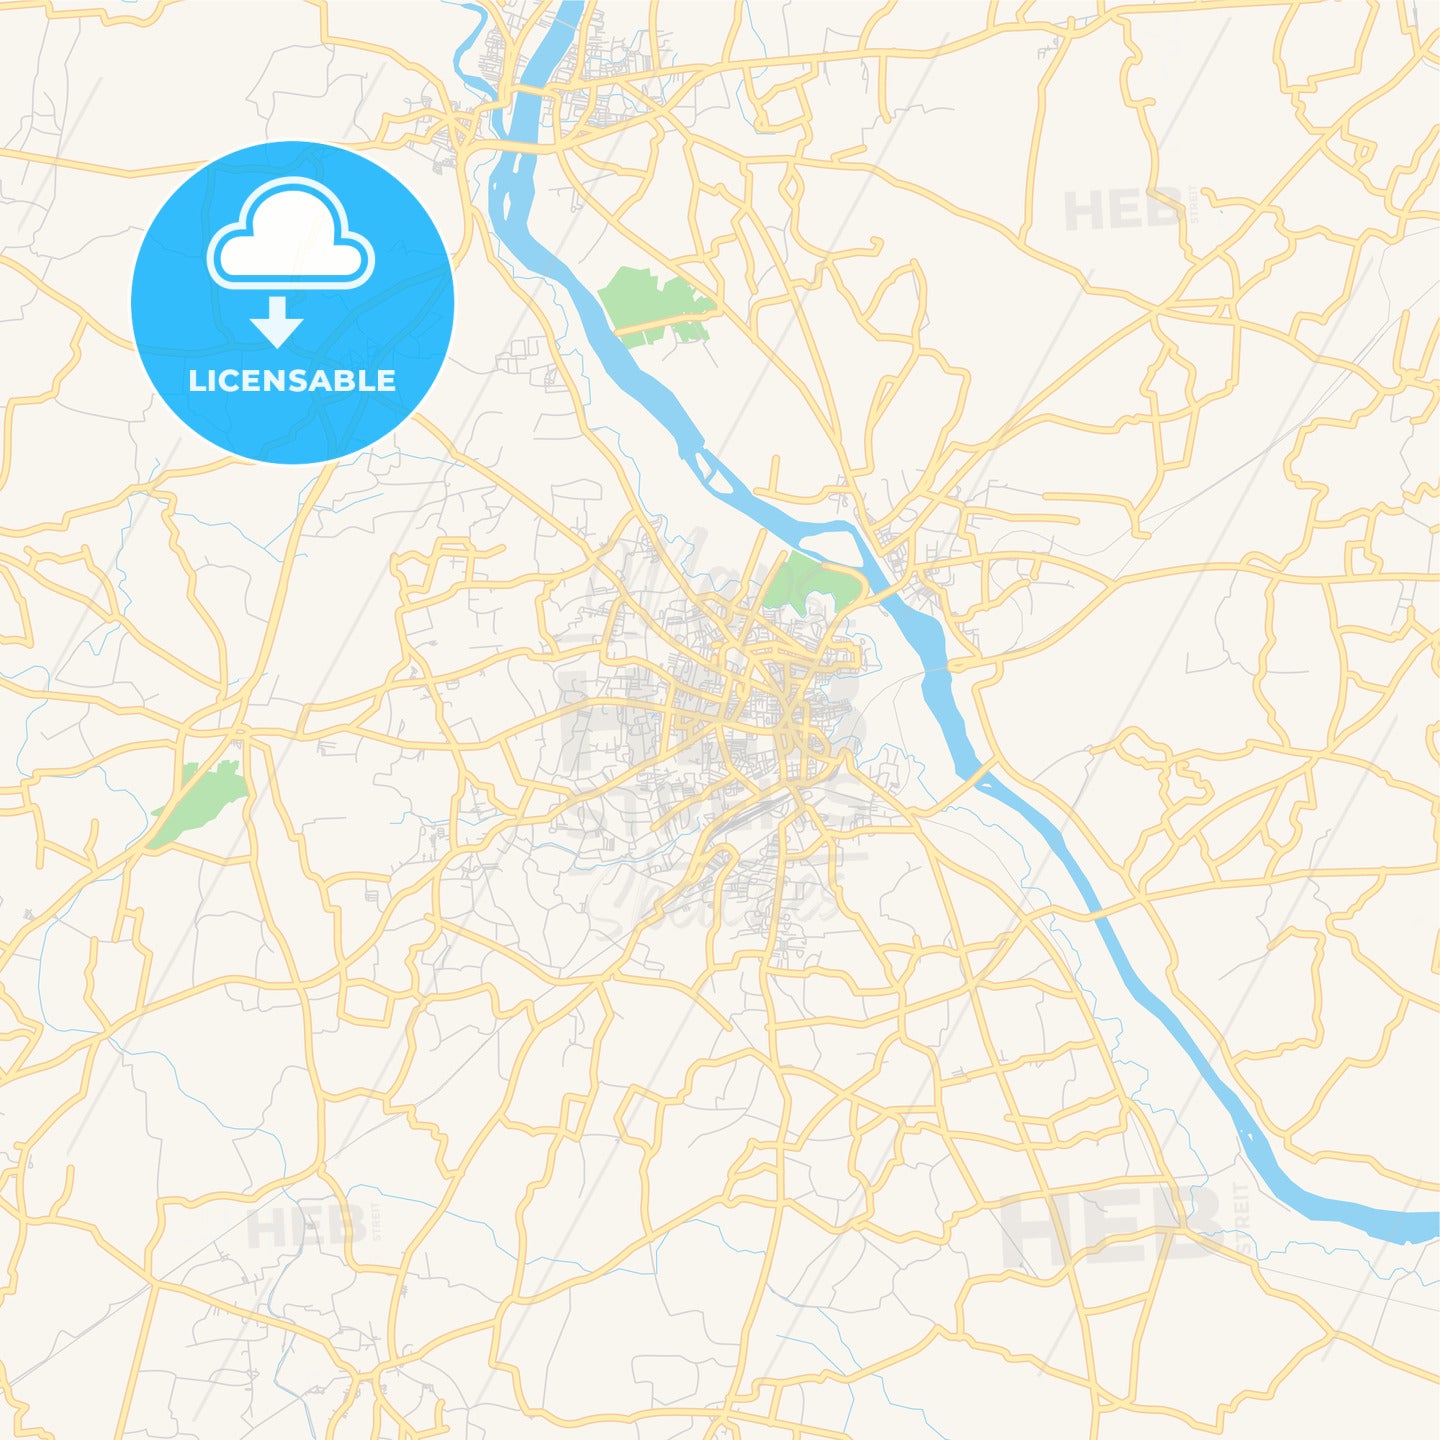 Printable street map of Erode, India